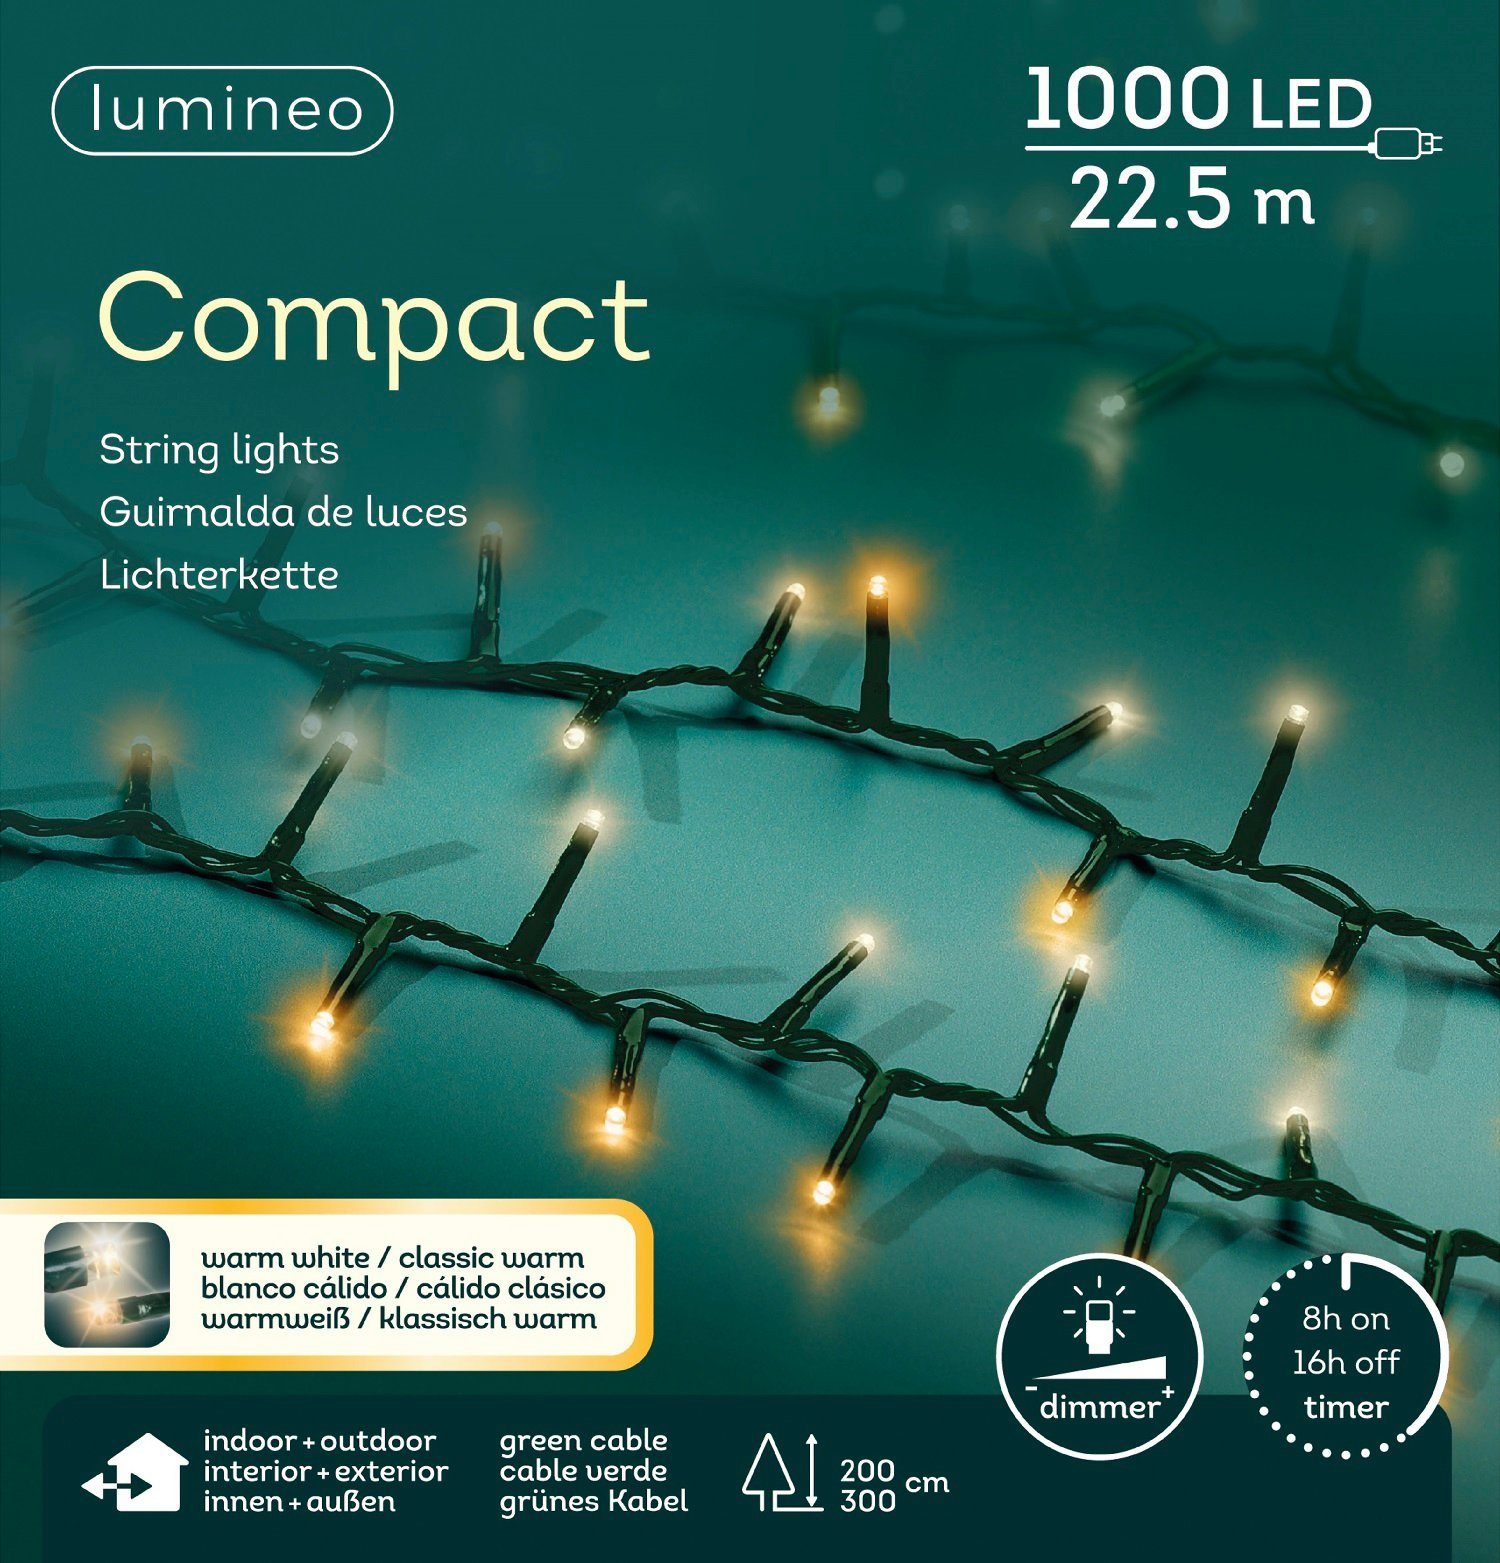 Lumineo LED-Lichterkette Lumineo Lichterkette Compact 1000 LED22,5 m warm weiß/klassisch warm, Dimmbar, Timer, Indoor, Outdoor